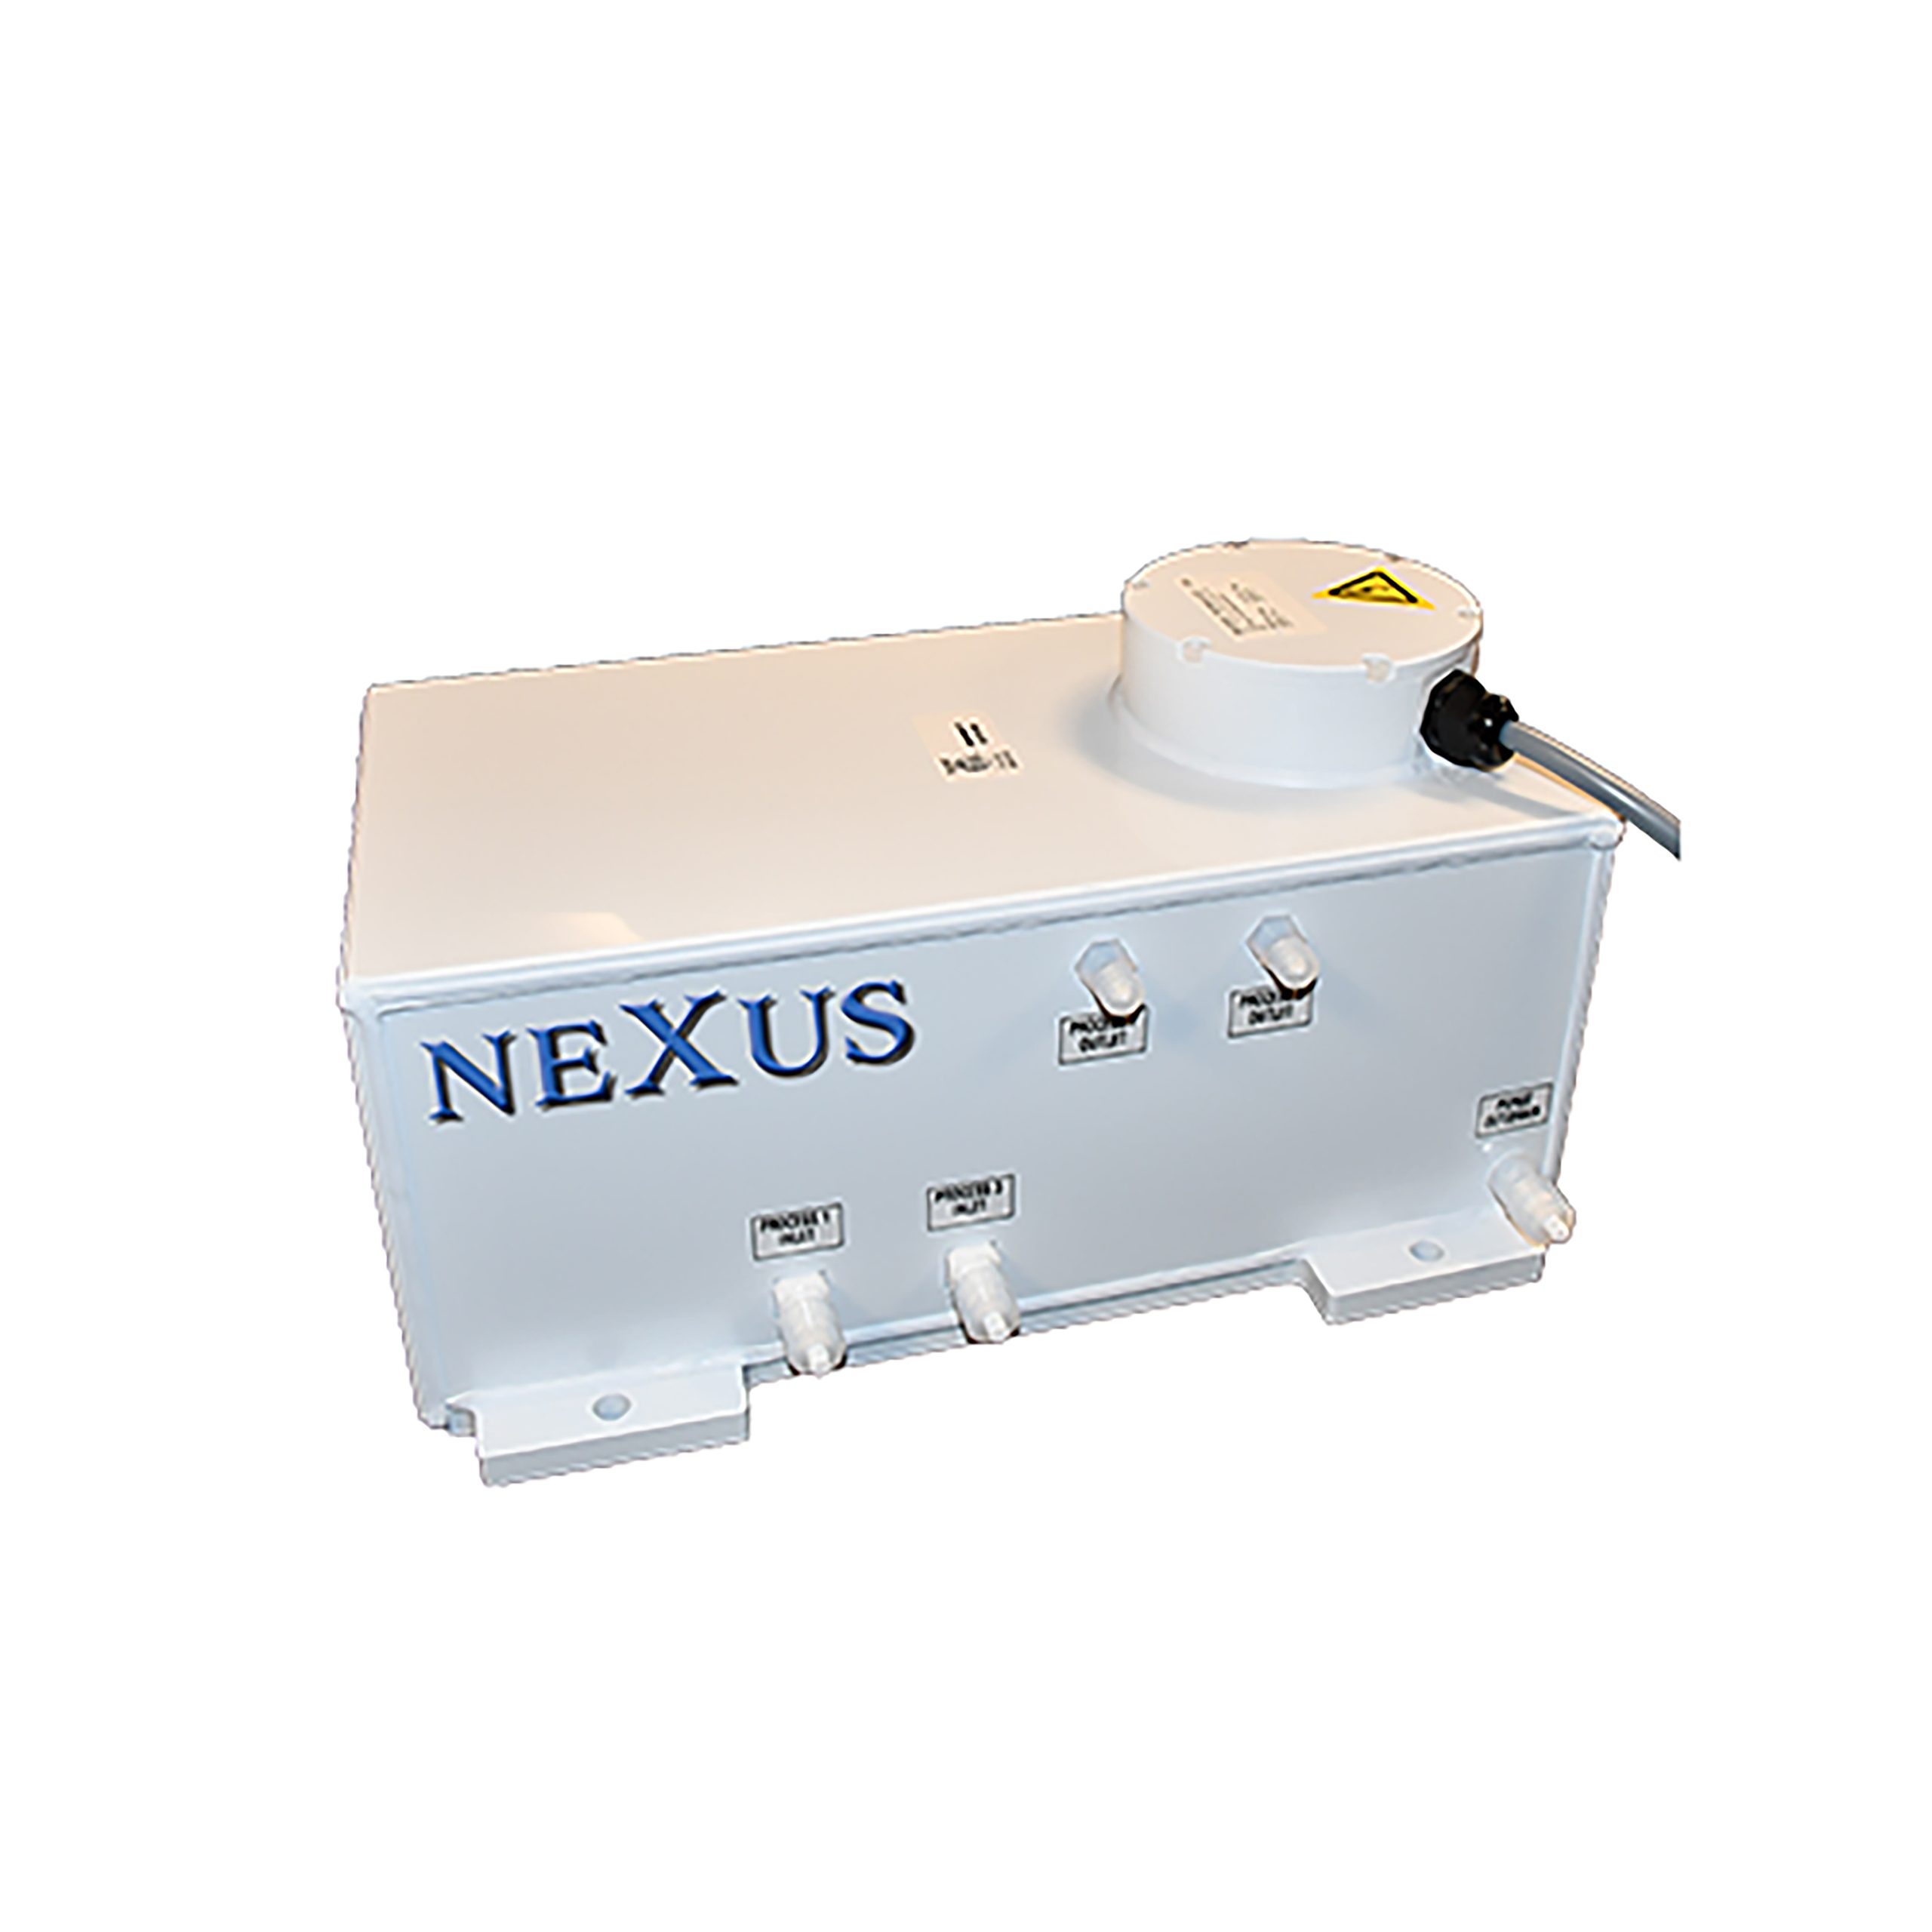 nexus-heater-2